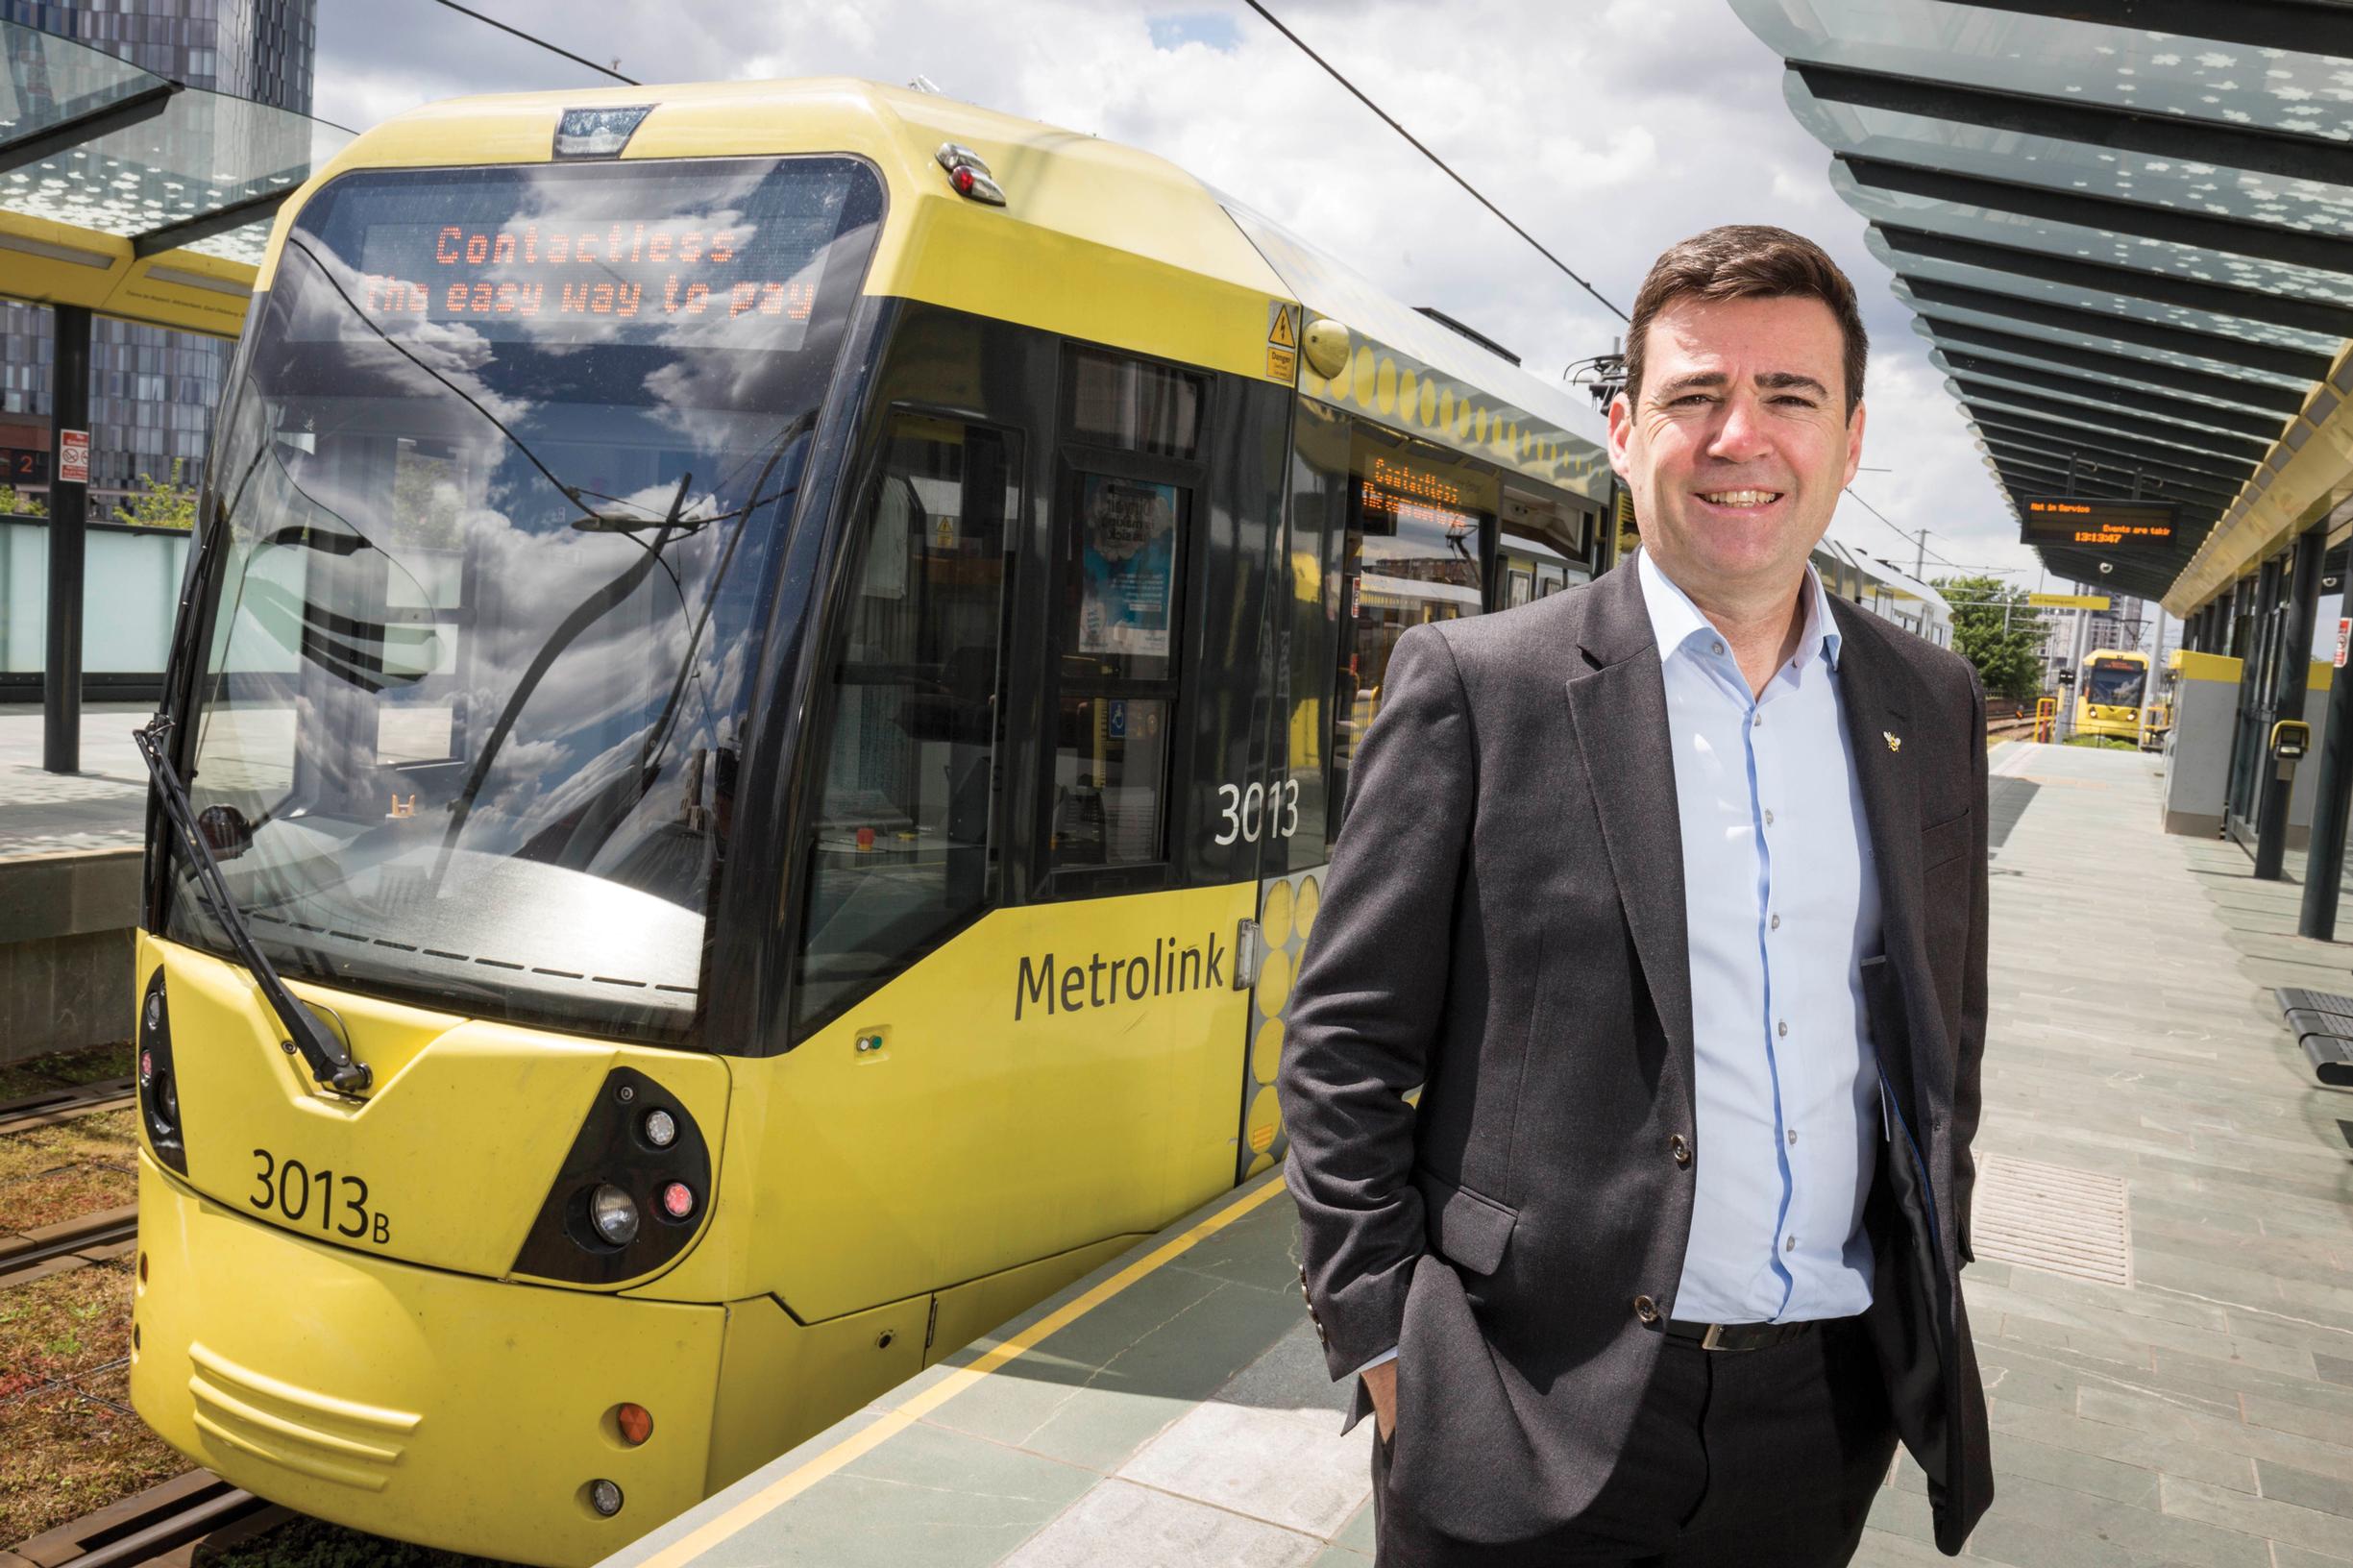 Andy Burnham seeks 200 per cent rise in trips on Metrolink